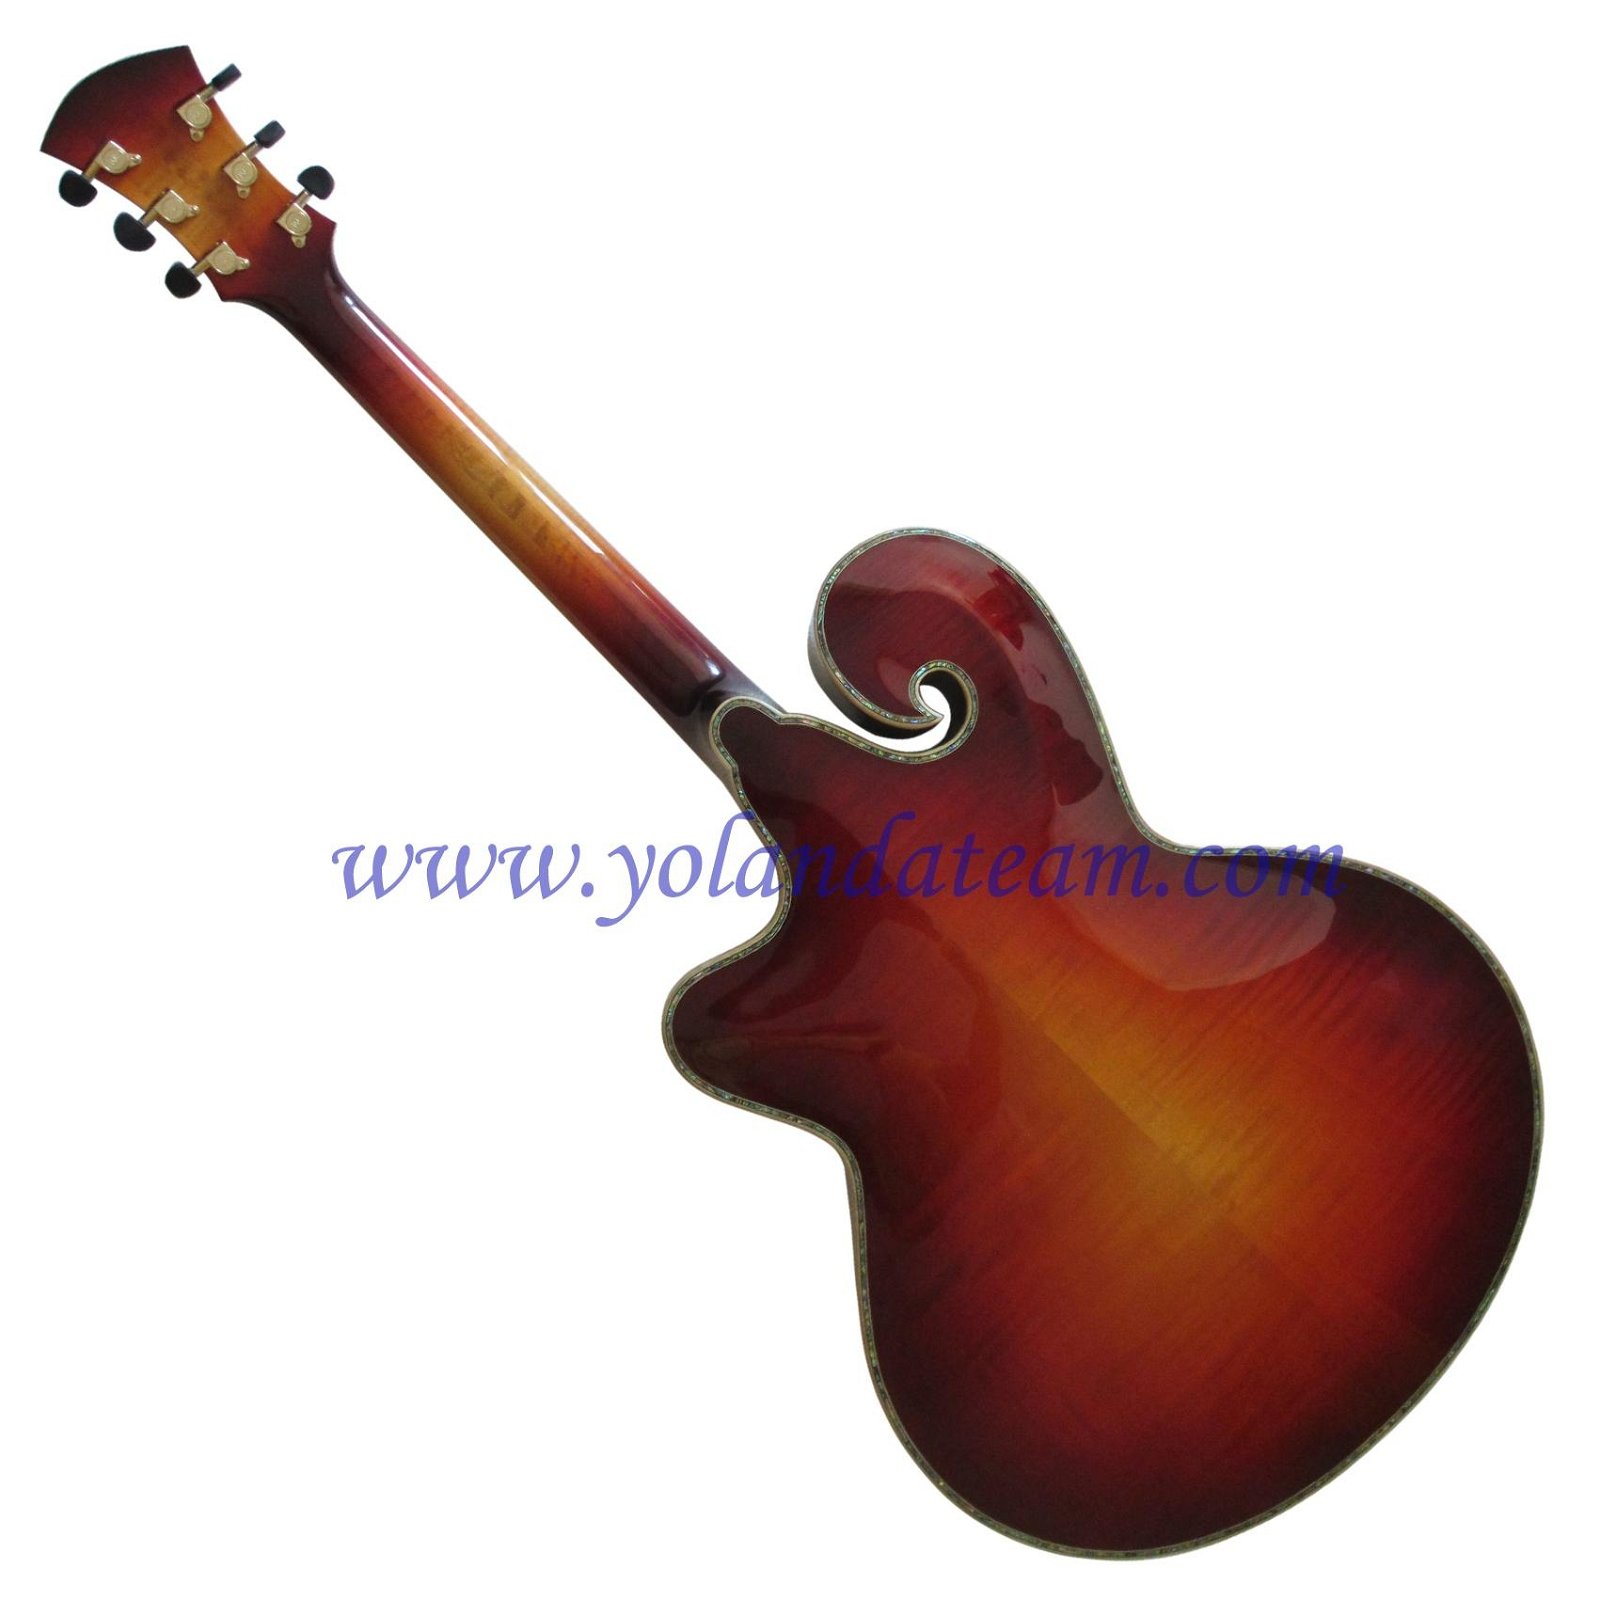 17inch mandolin style jazz guitar 2